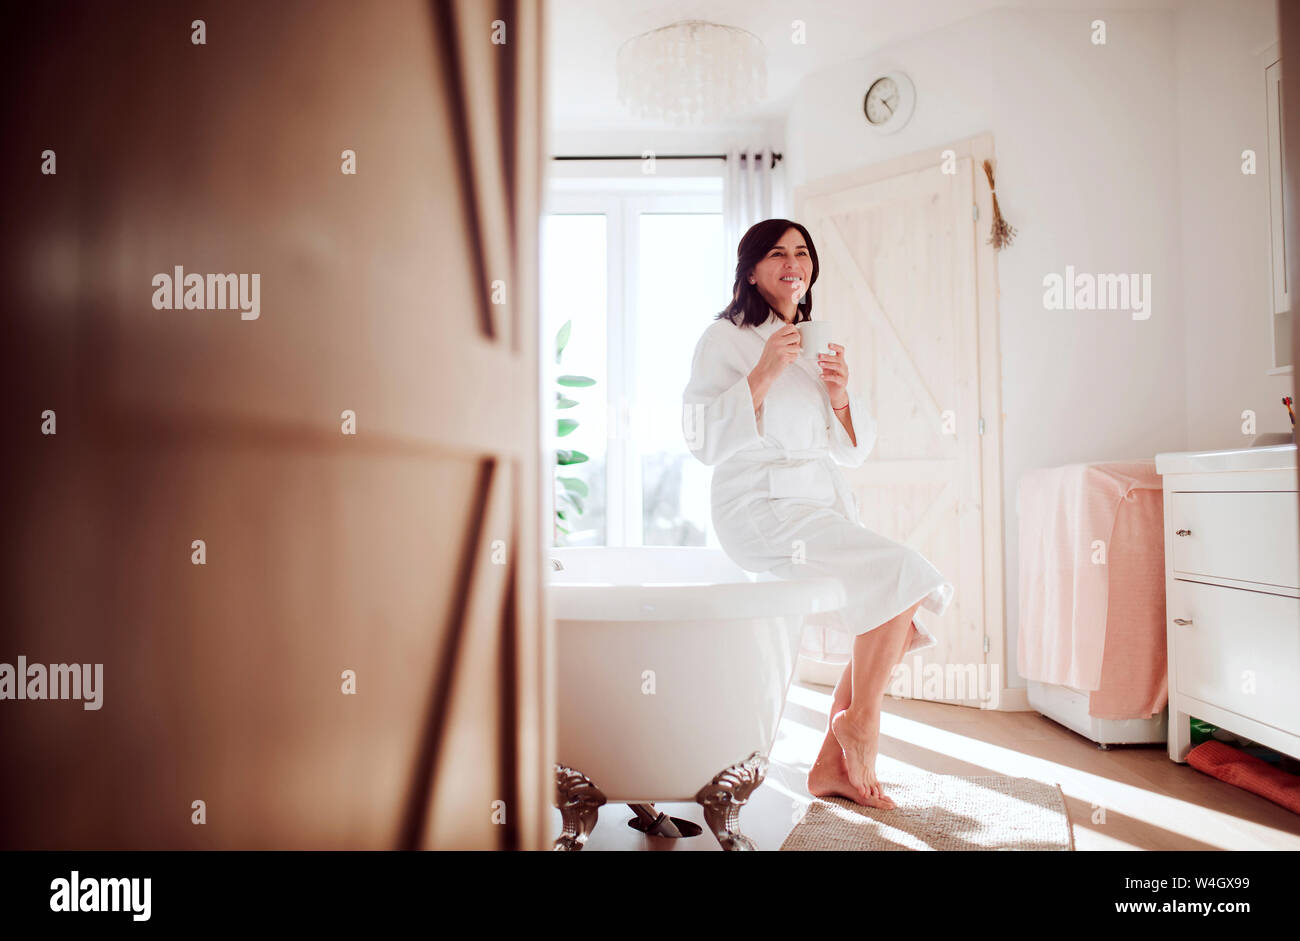 Mature woman sitting on bath tub, drinking coffee Stock Photo - Alamy